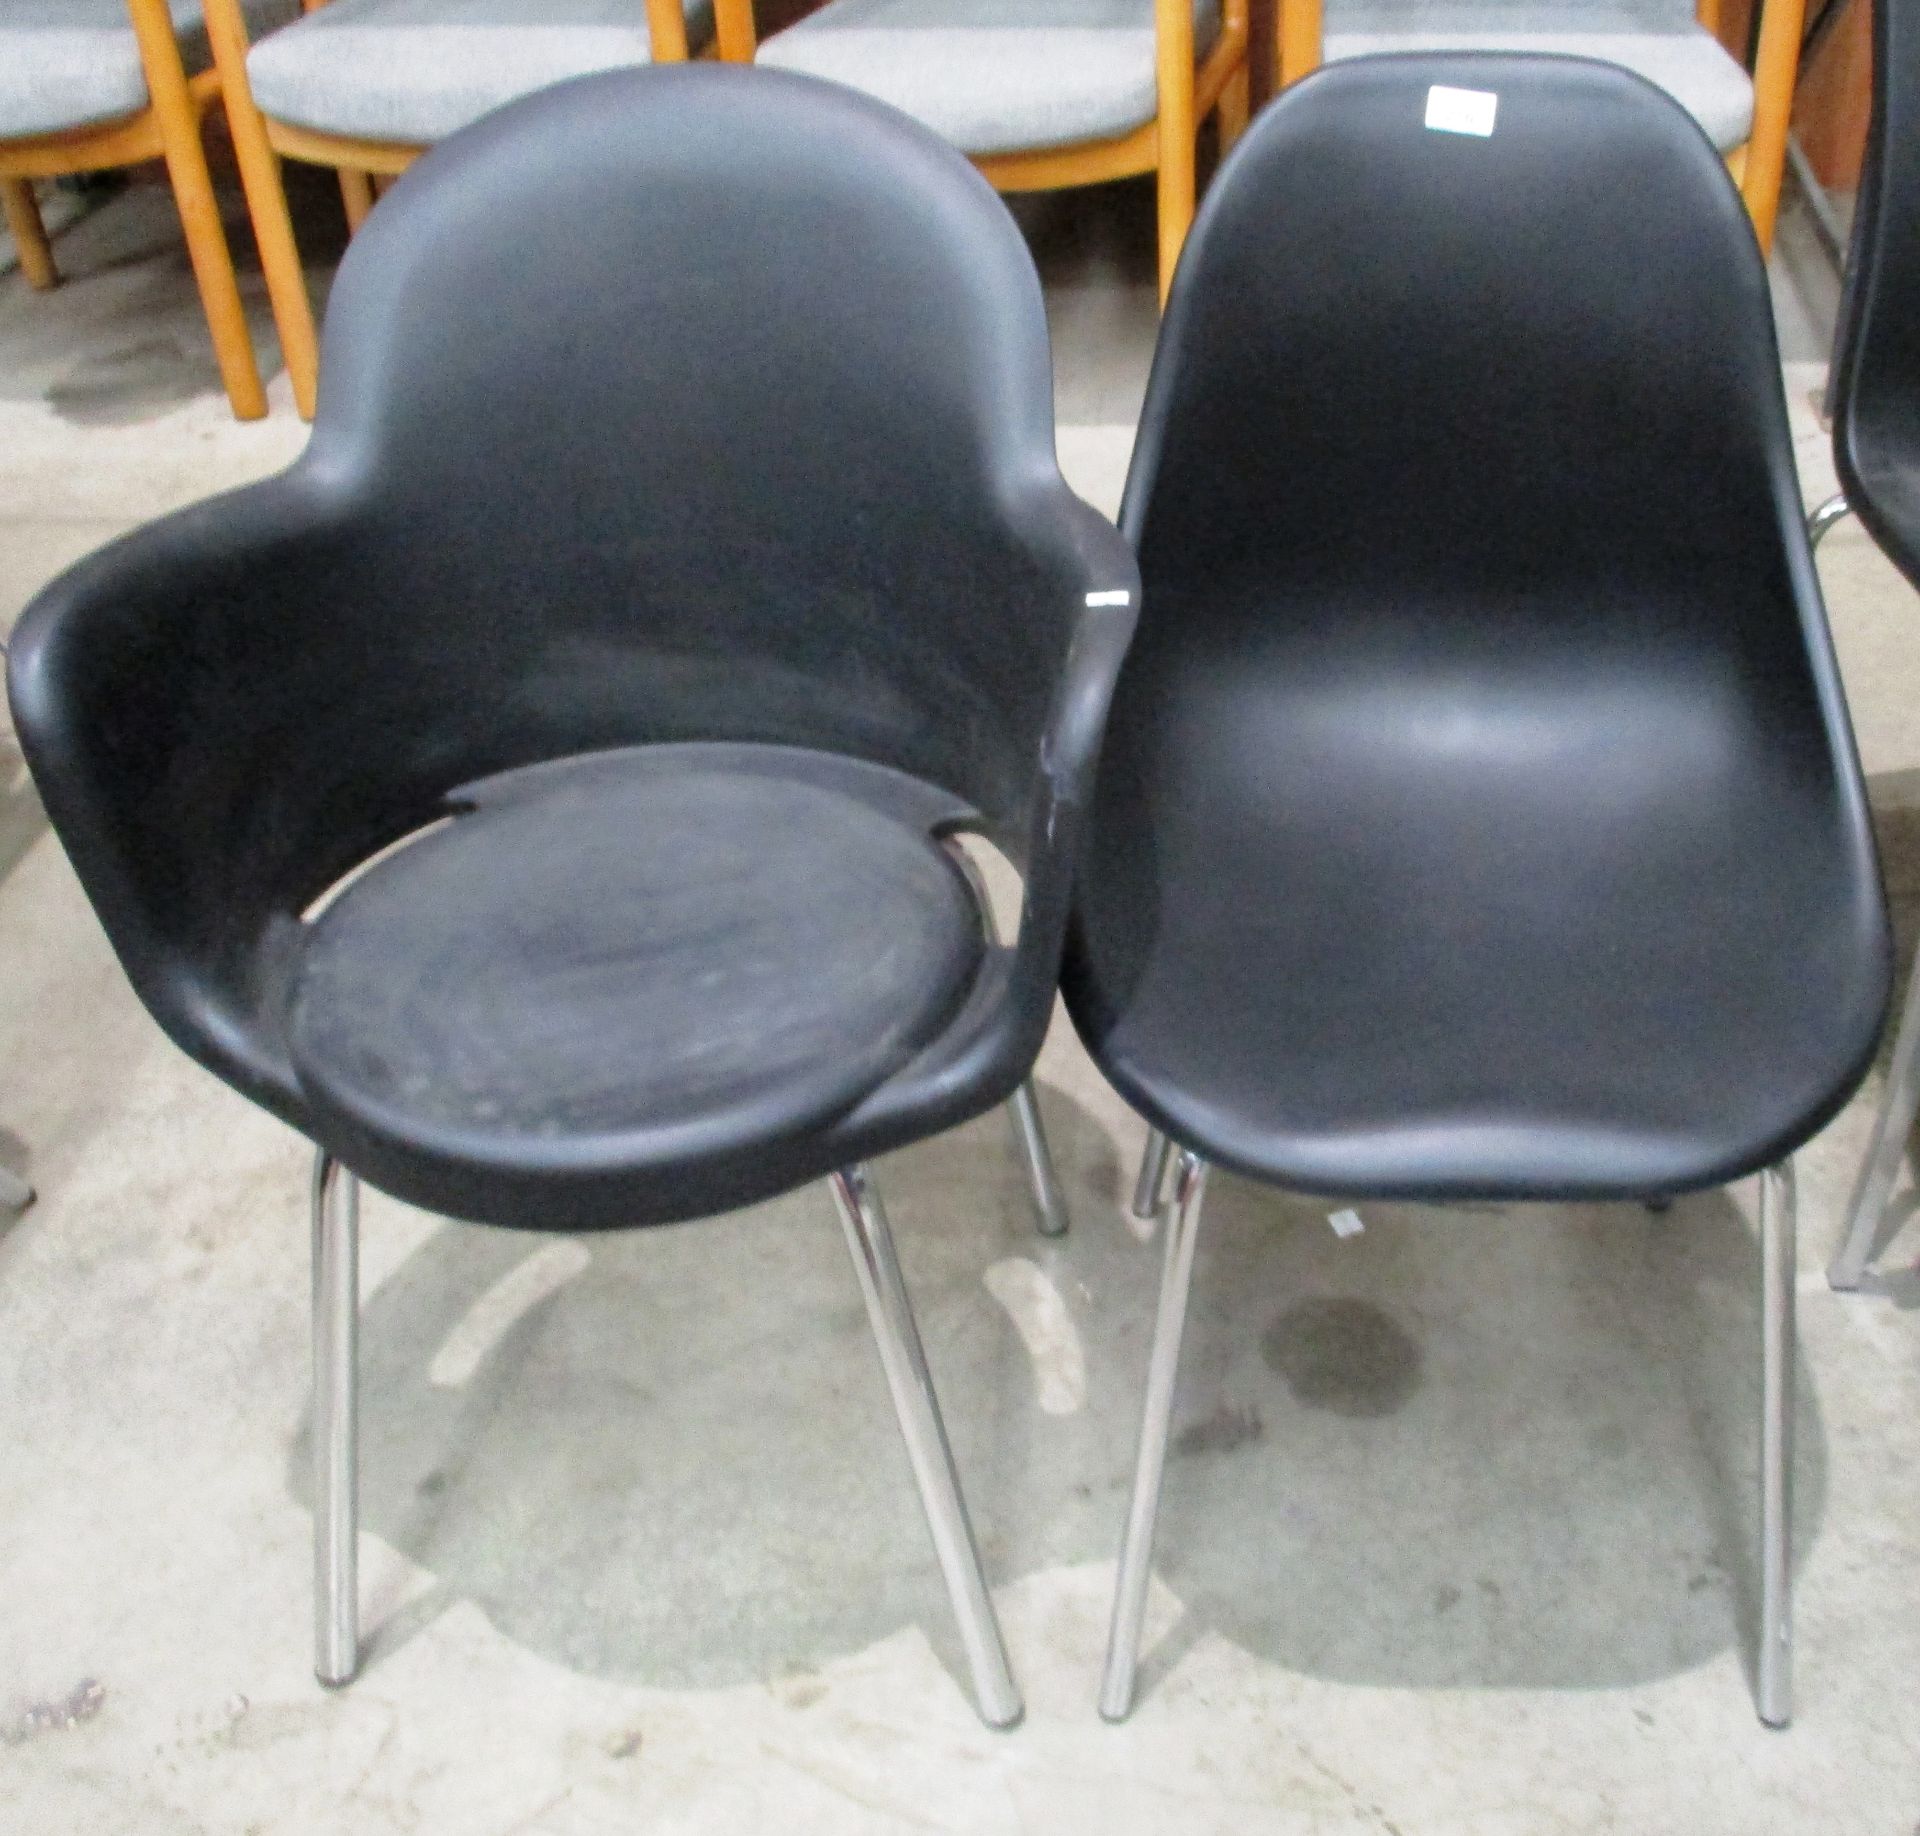 A black polypropylene shell chair on chrome legs and a black polypropylene tub armchair on chrome